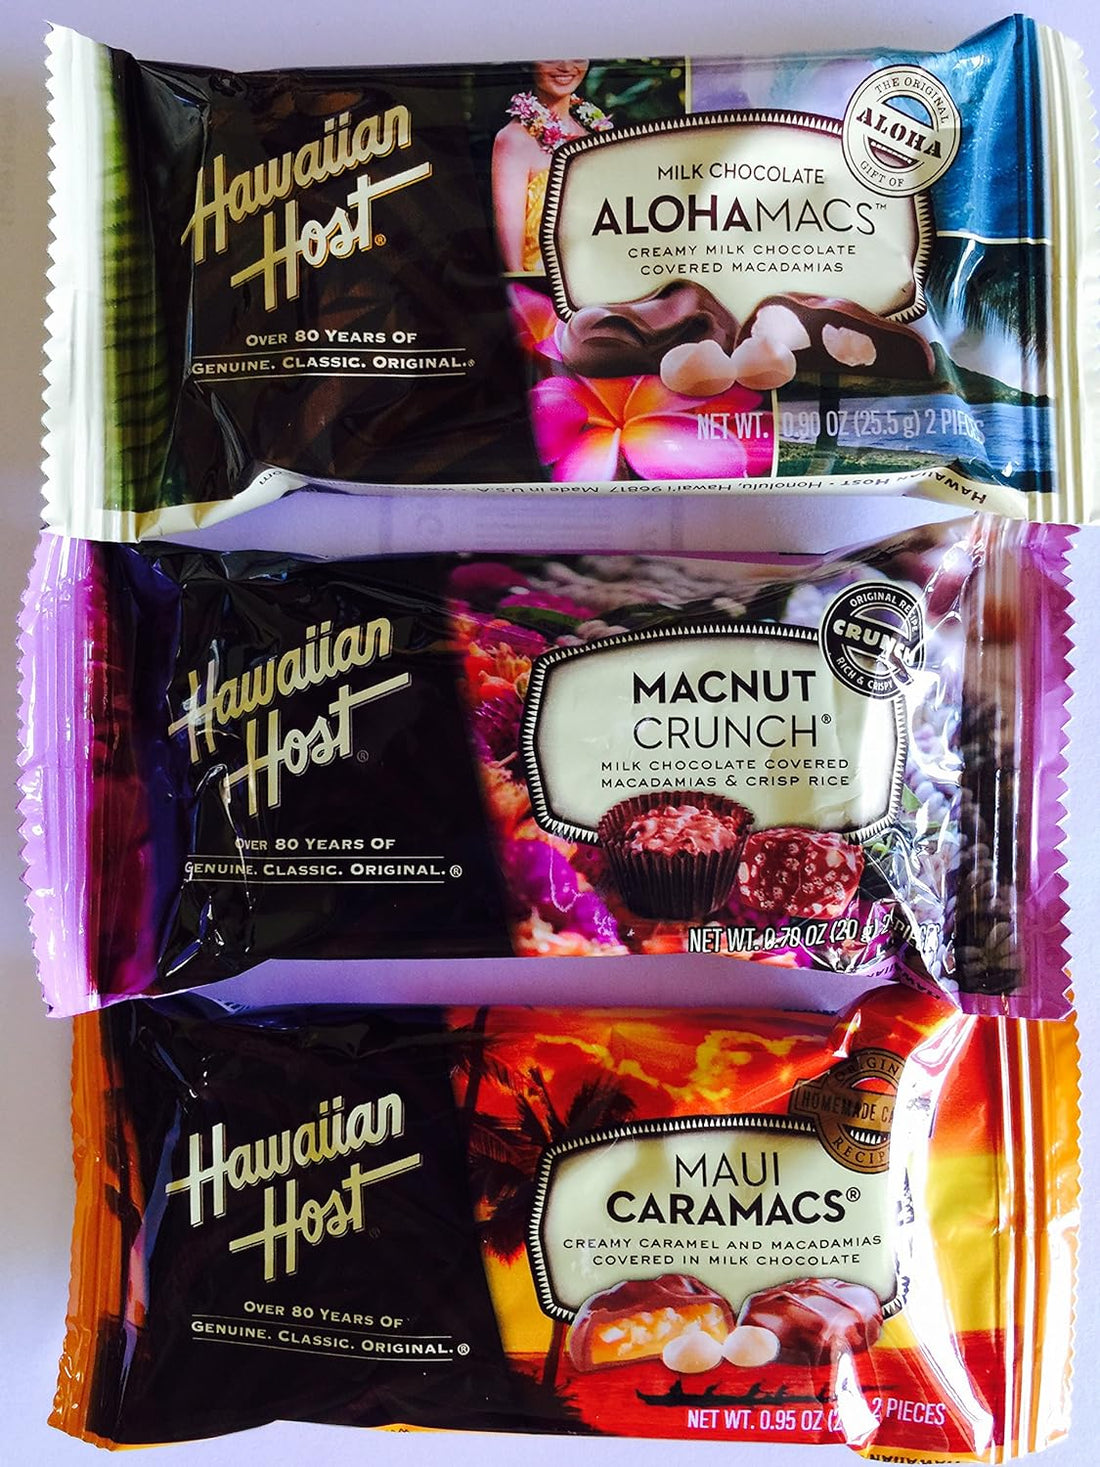 Hawaiian Host Island Trio Gift Pack 18 Count Chocolate and Macadamia